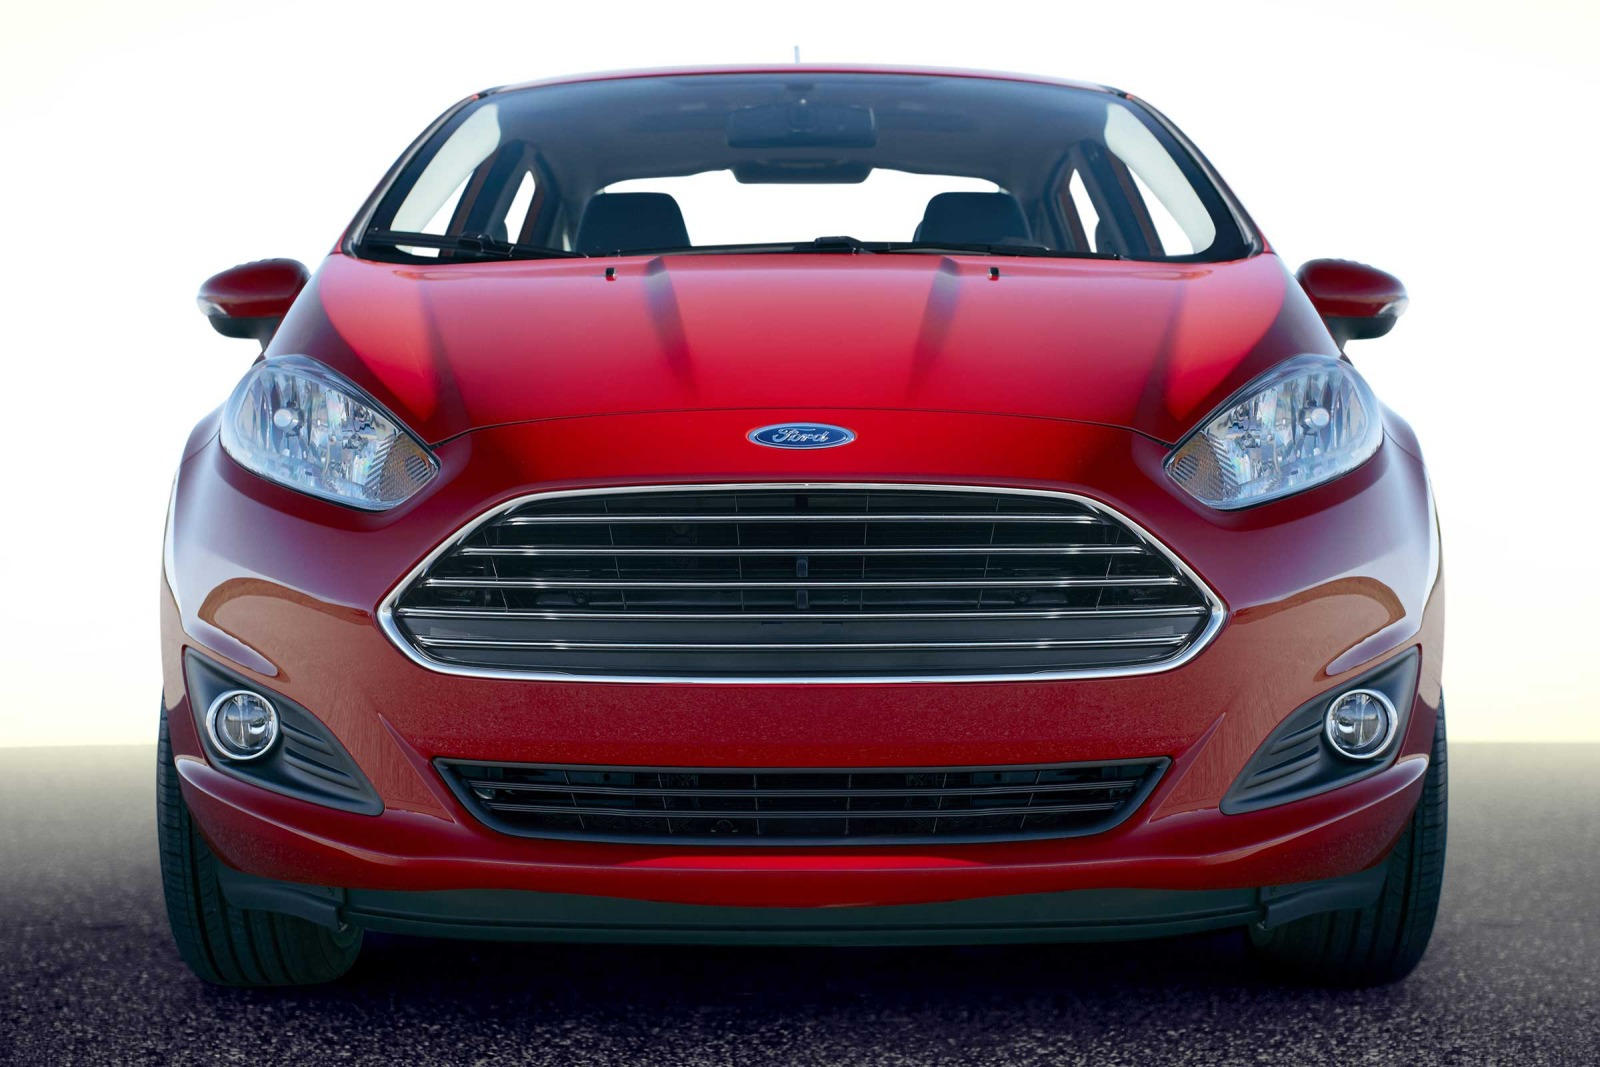 2015 Ford Fiesta Sedan Front View